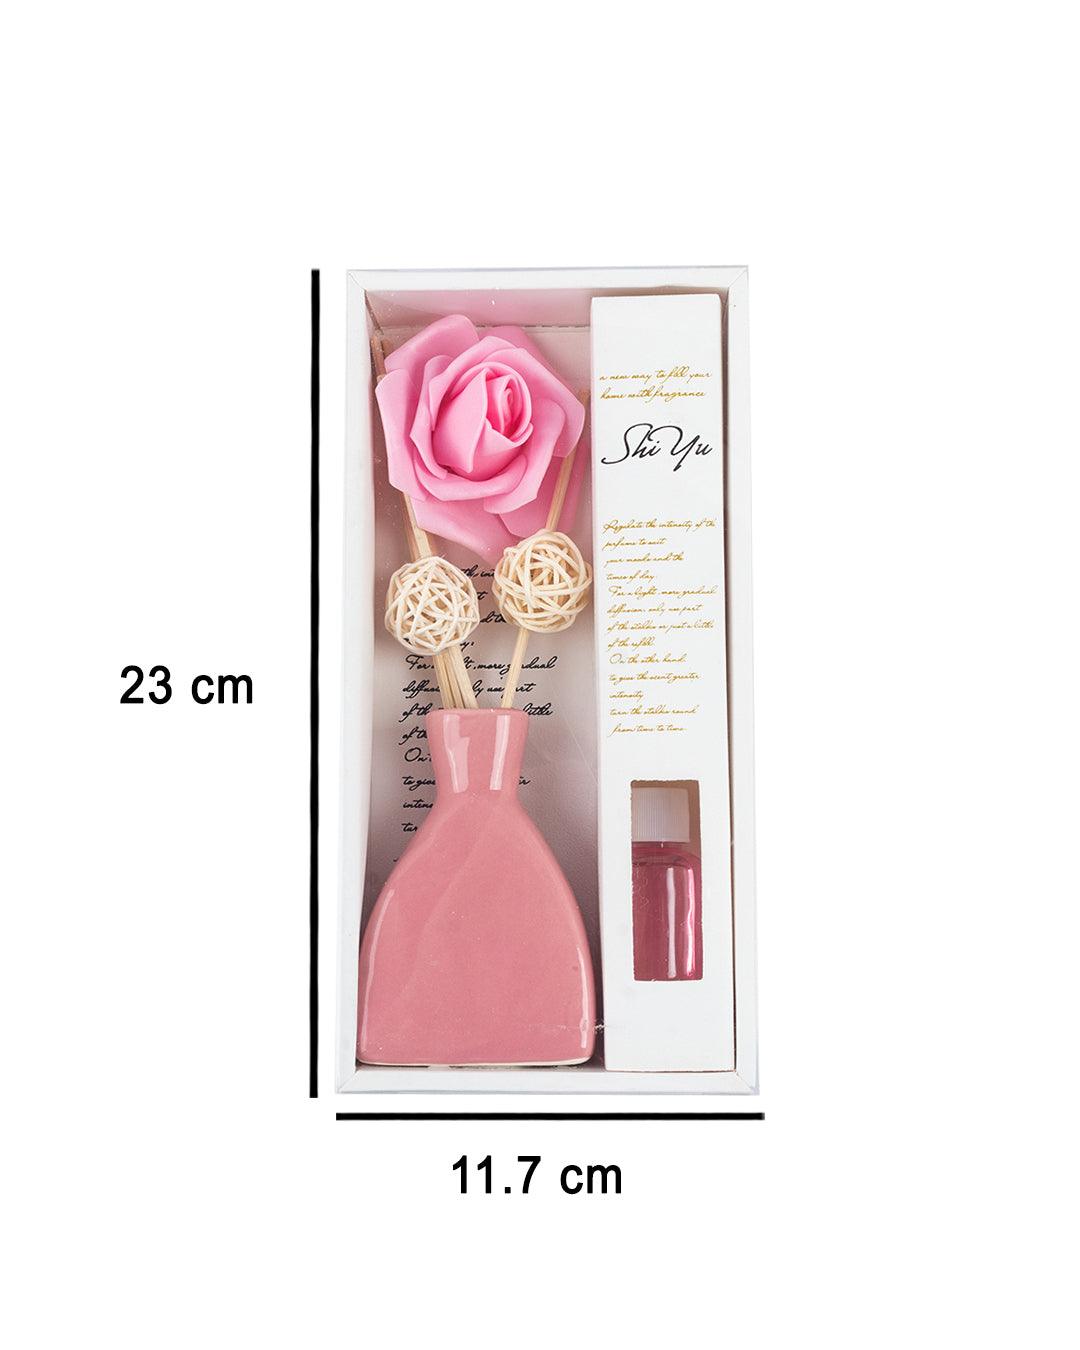 Reed Diffuser Set, Rose Fragrance Pot & Reed Stick, Pink, Ceramic, 30 mL - MARKET 99